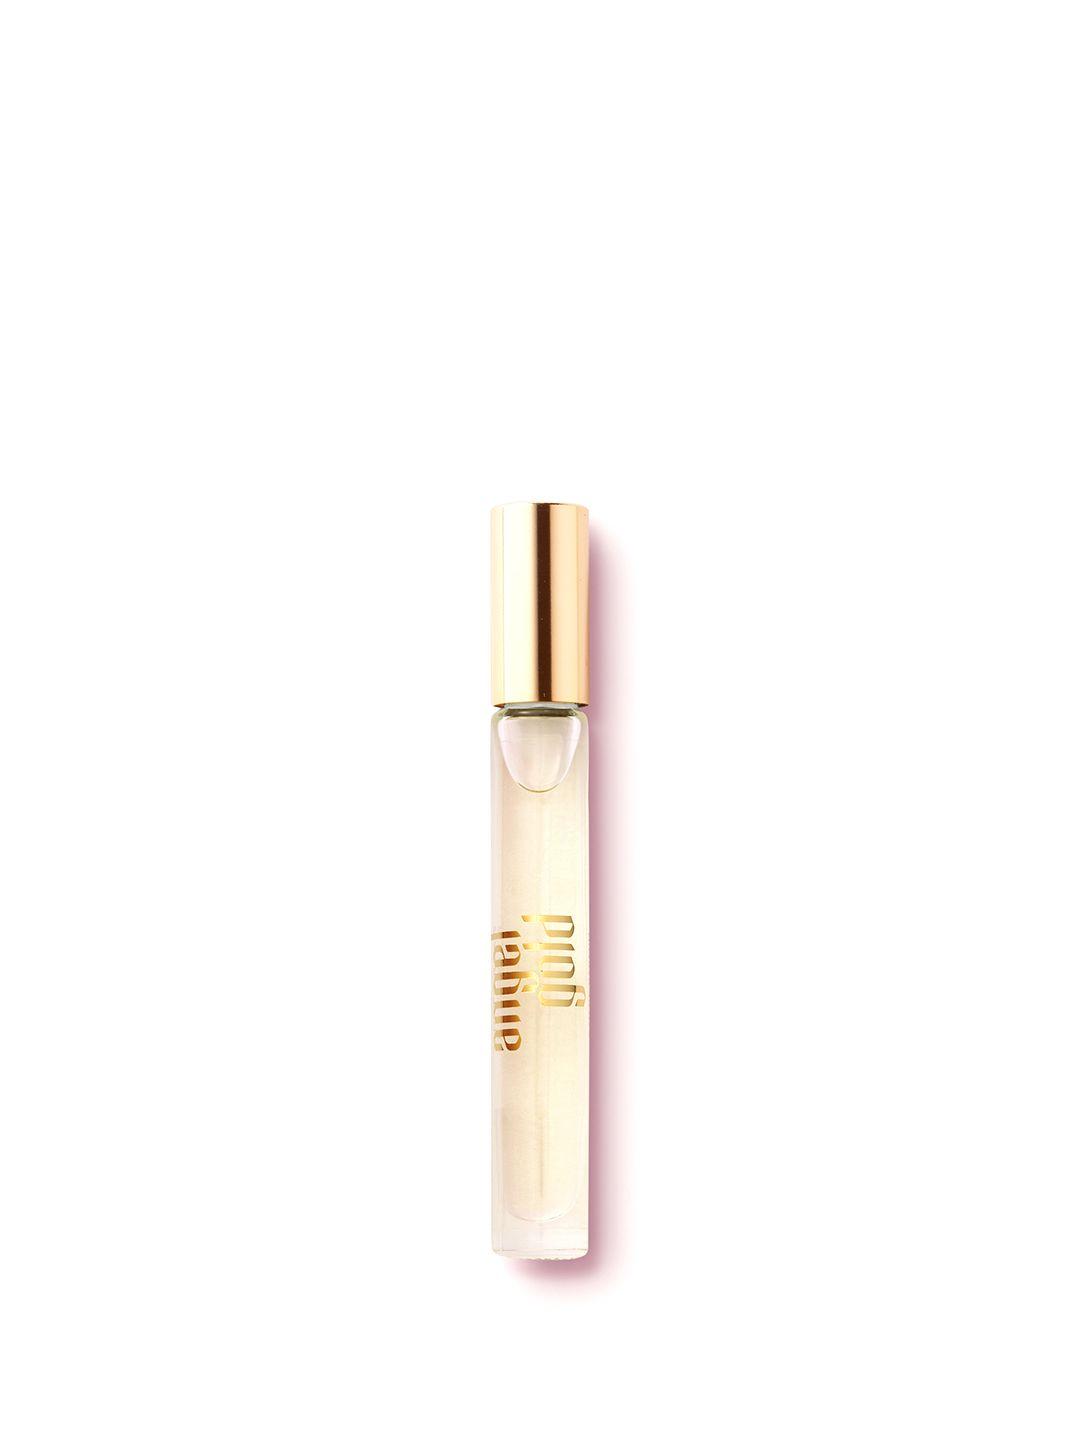 victoria's secret women angel gold long-lasting eau de parfum rollerball - 7ml